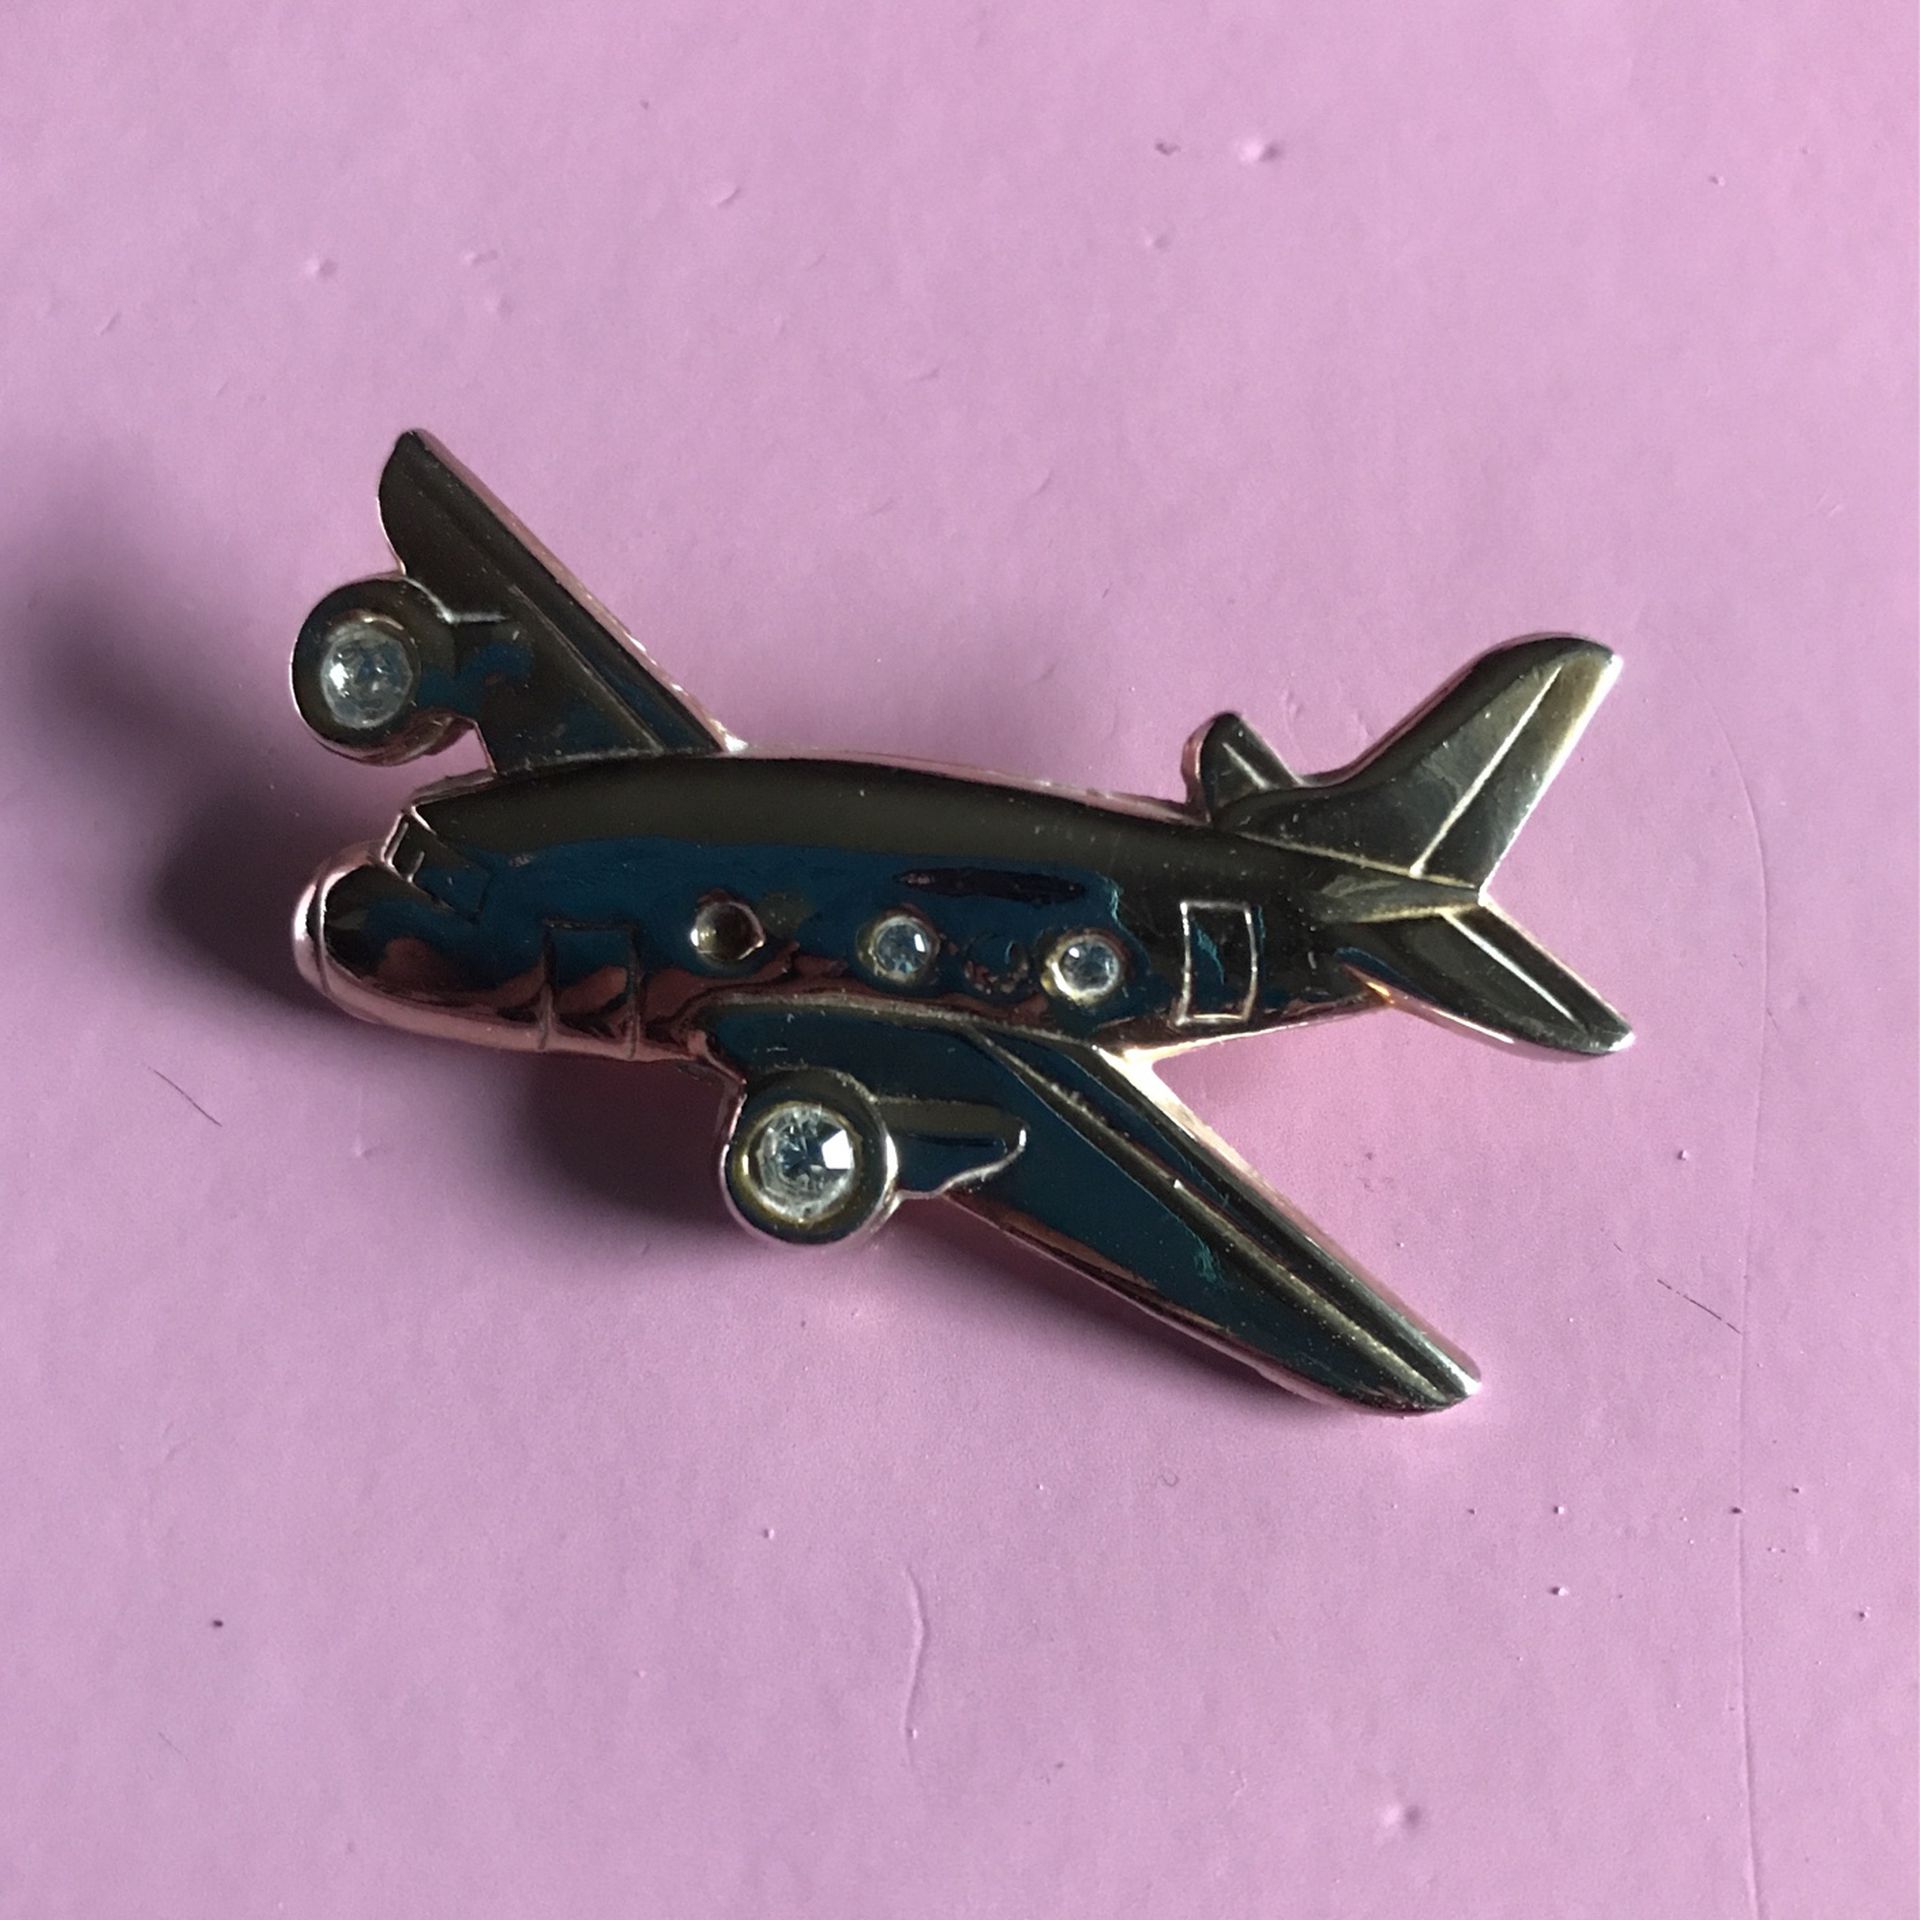 chanel airplane brooch